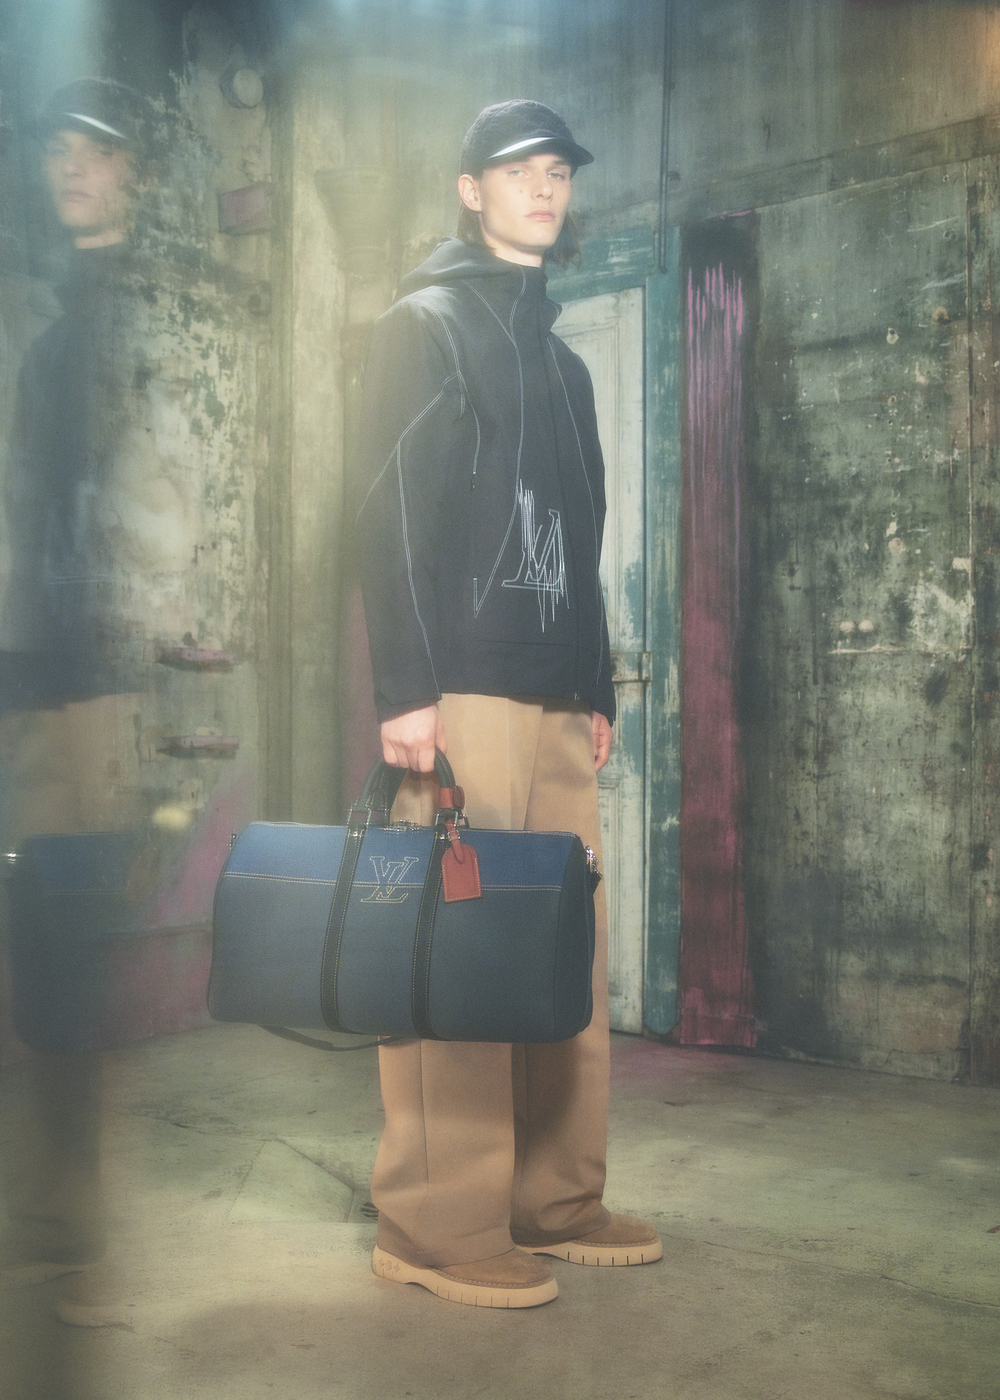 New Season Keepall Bags To Love From Louis Vuitton #LVMenSS22